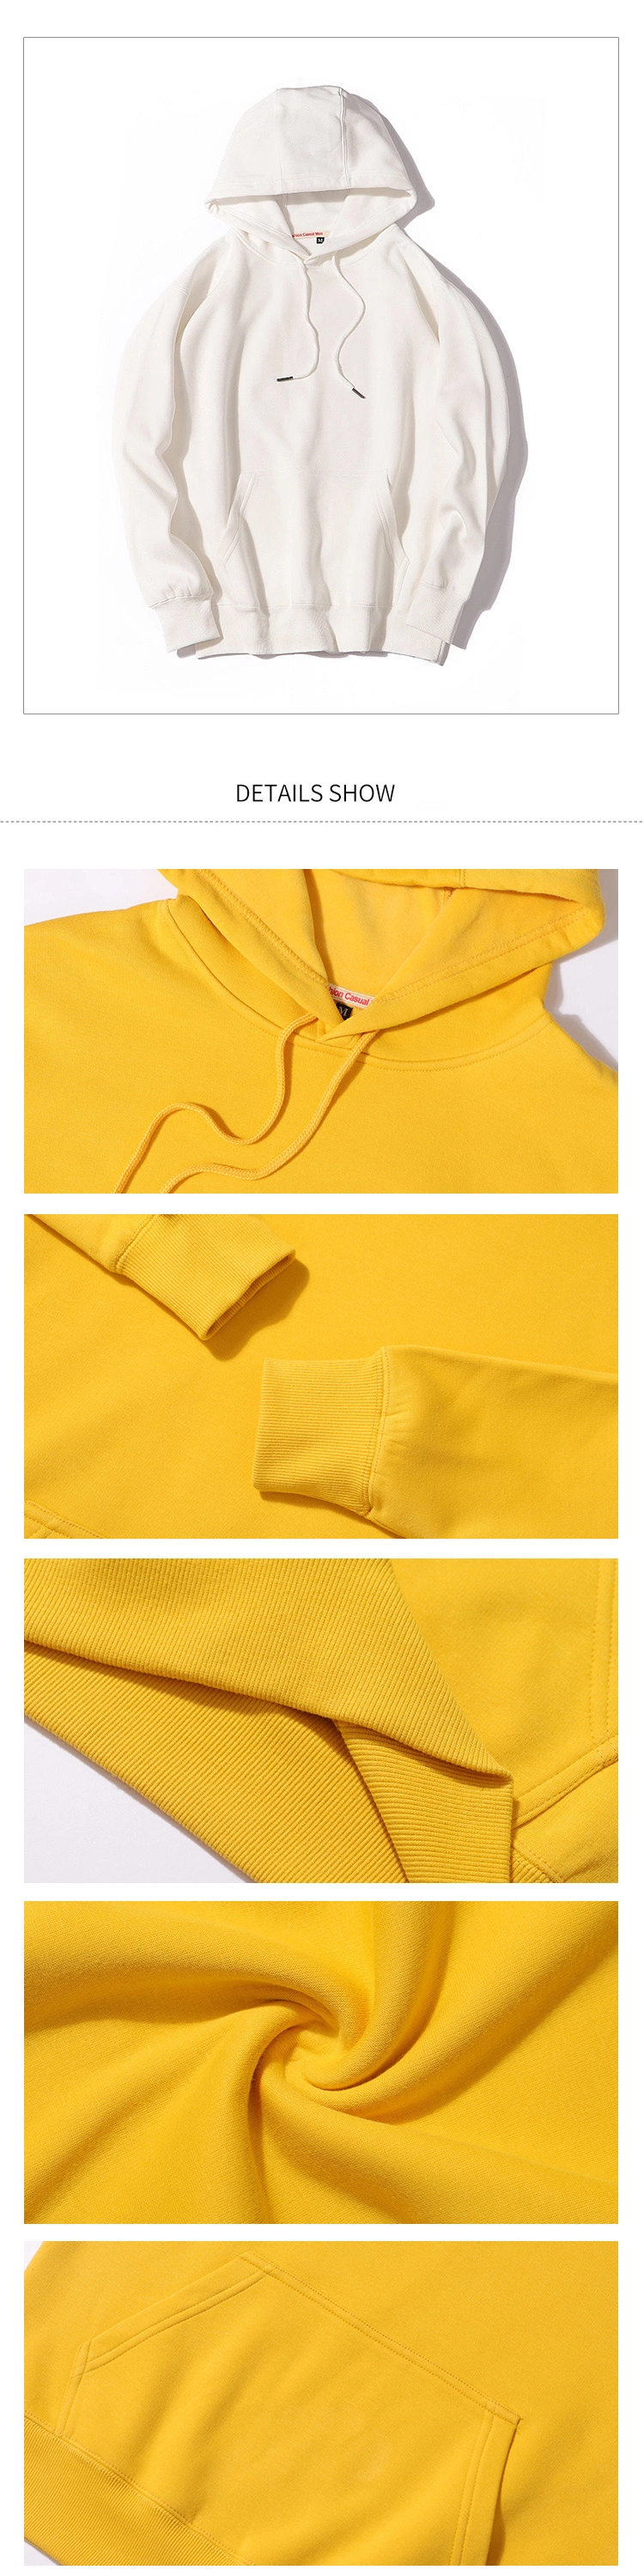 Unisex Thin Blank Solid Custom Logo Pullover Hoodies Sweatshirts Sports Wear Clothing